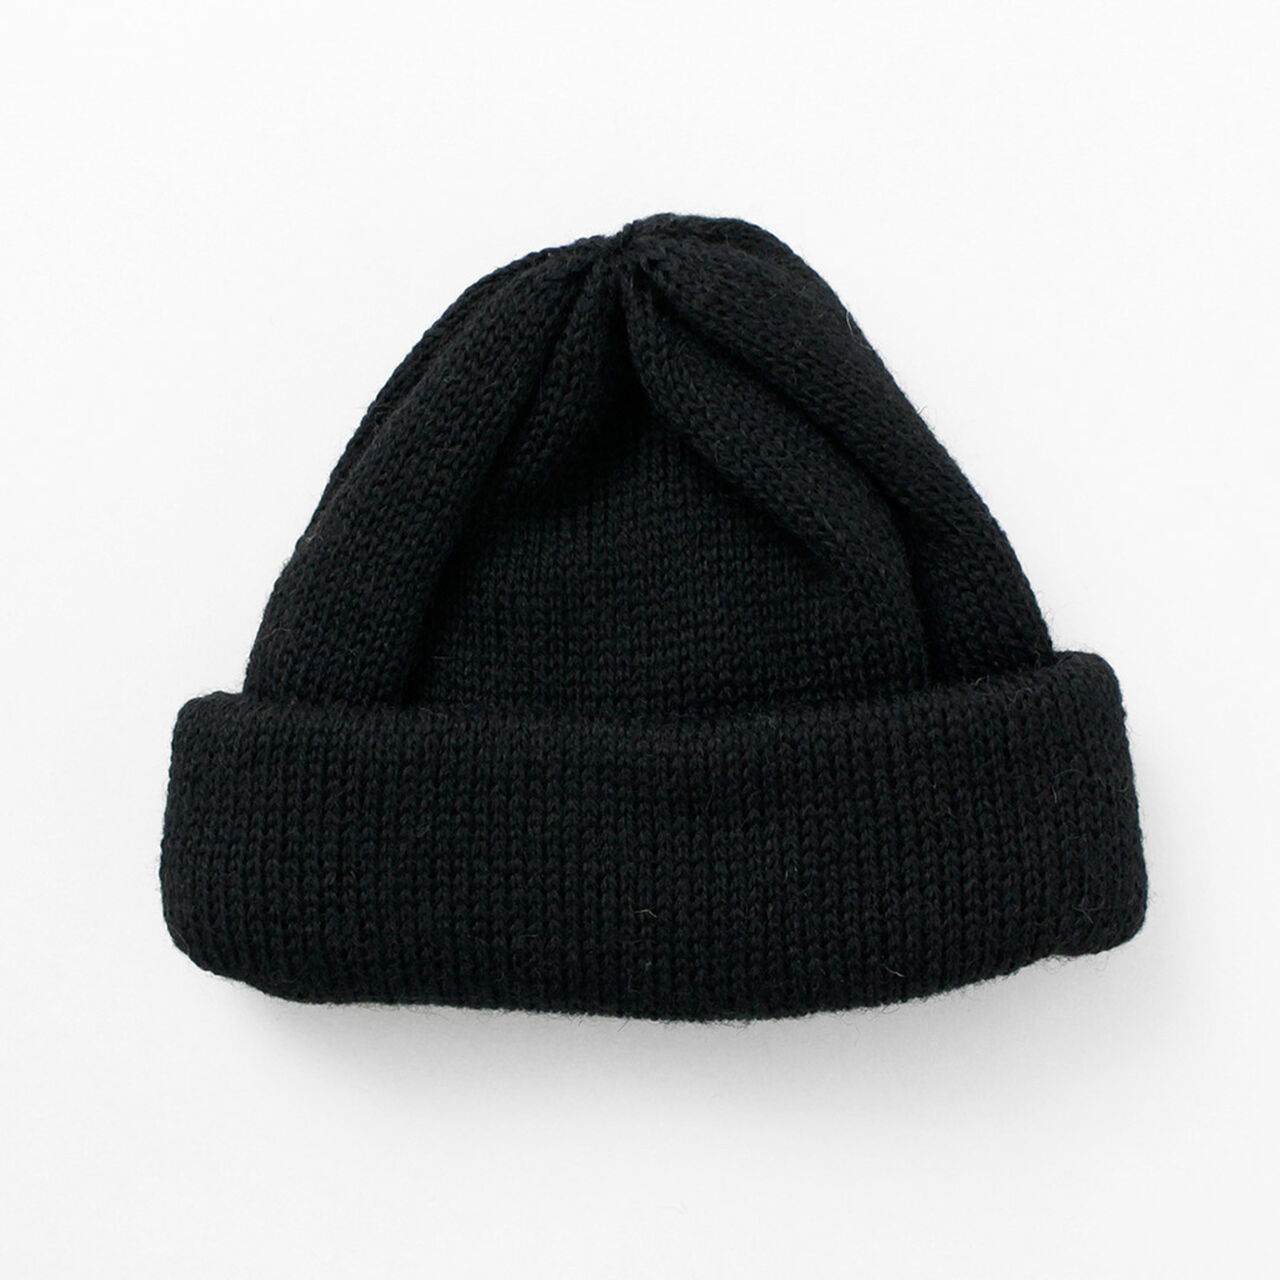 British Wool Tubular Bobby Cap,Black, large image number 0